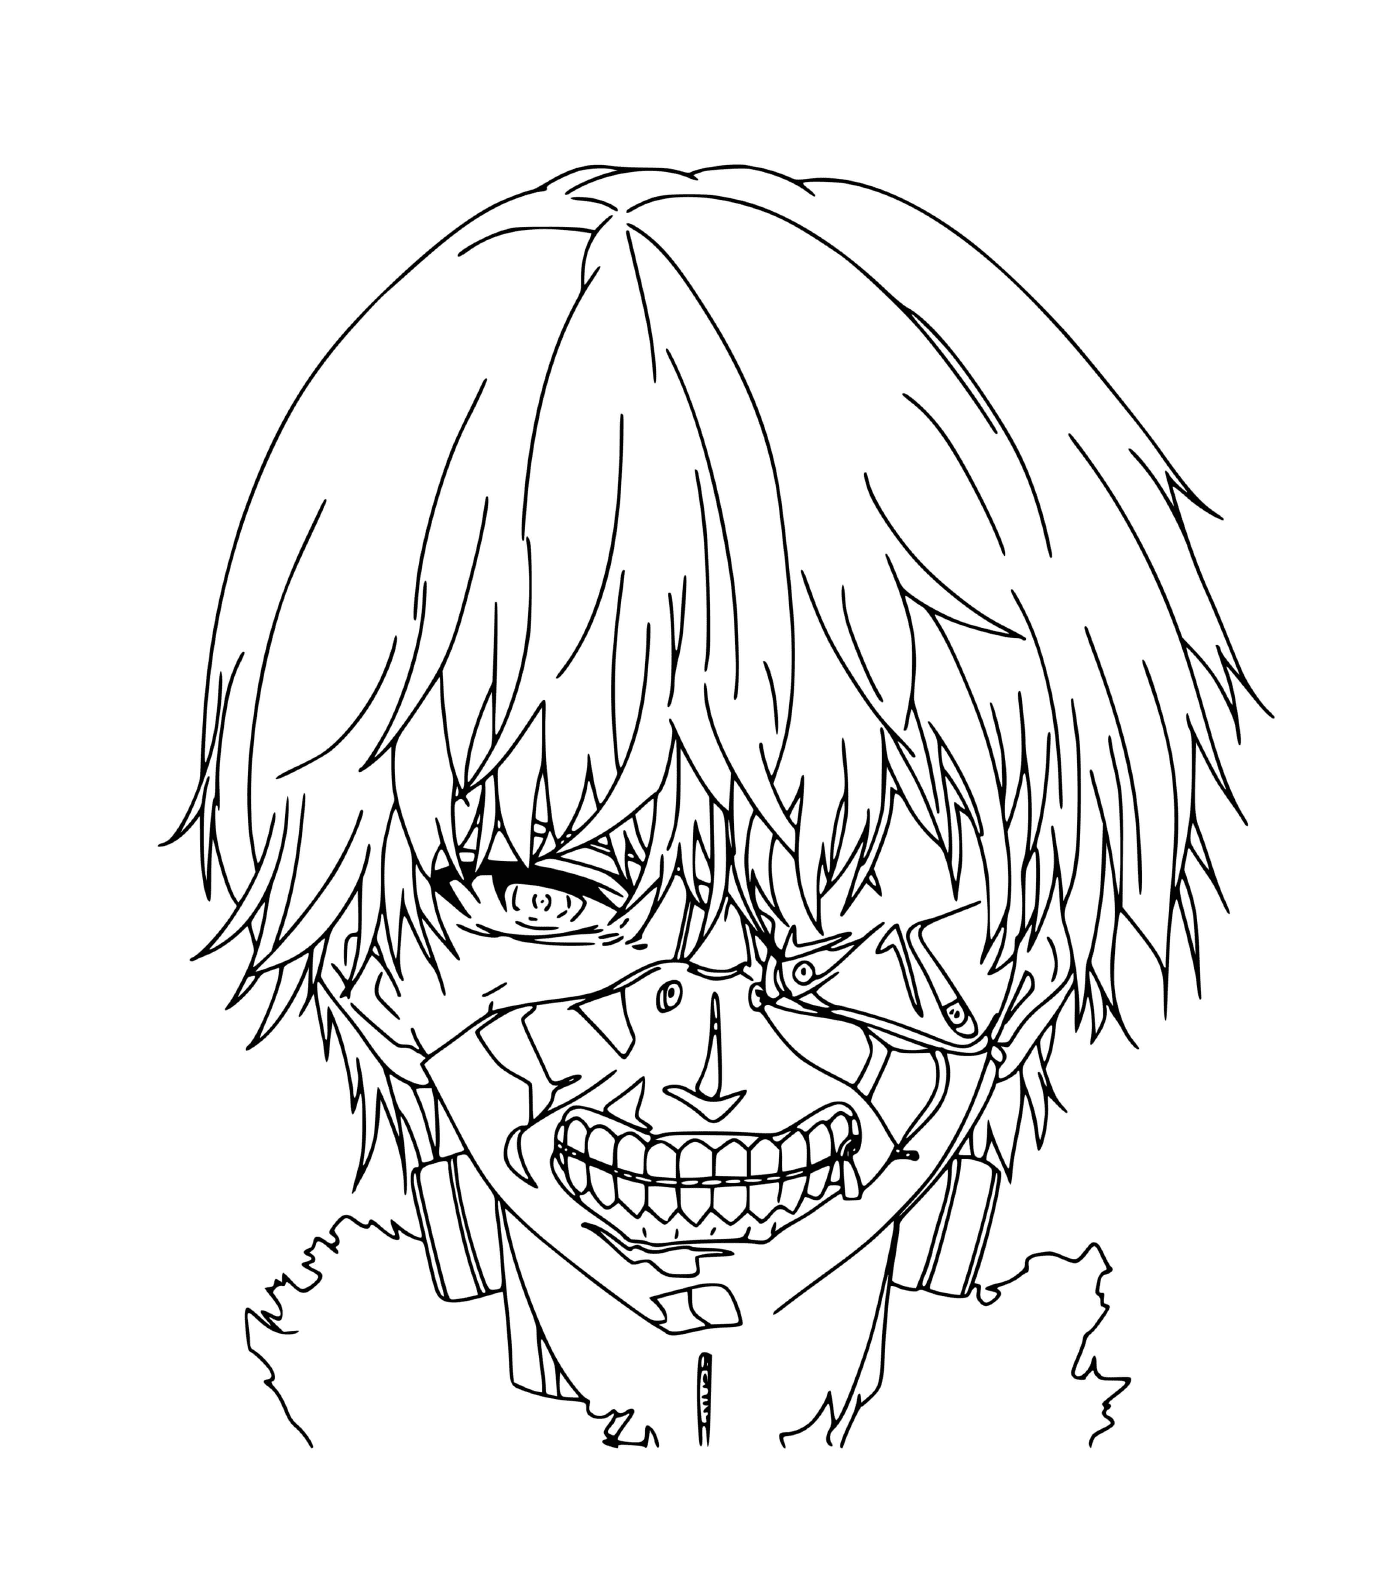   Ken Kaneki, le visage effrayant de Tokyo Ghoul 